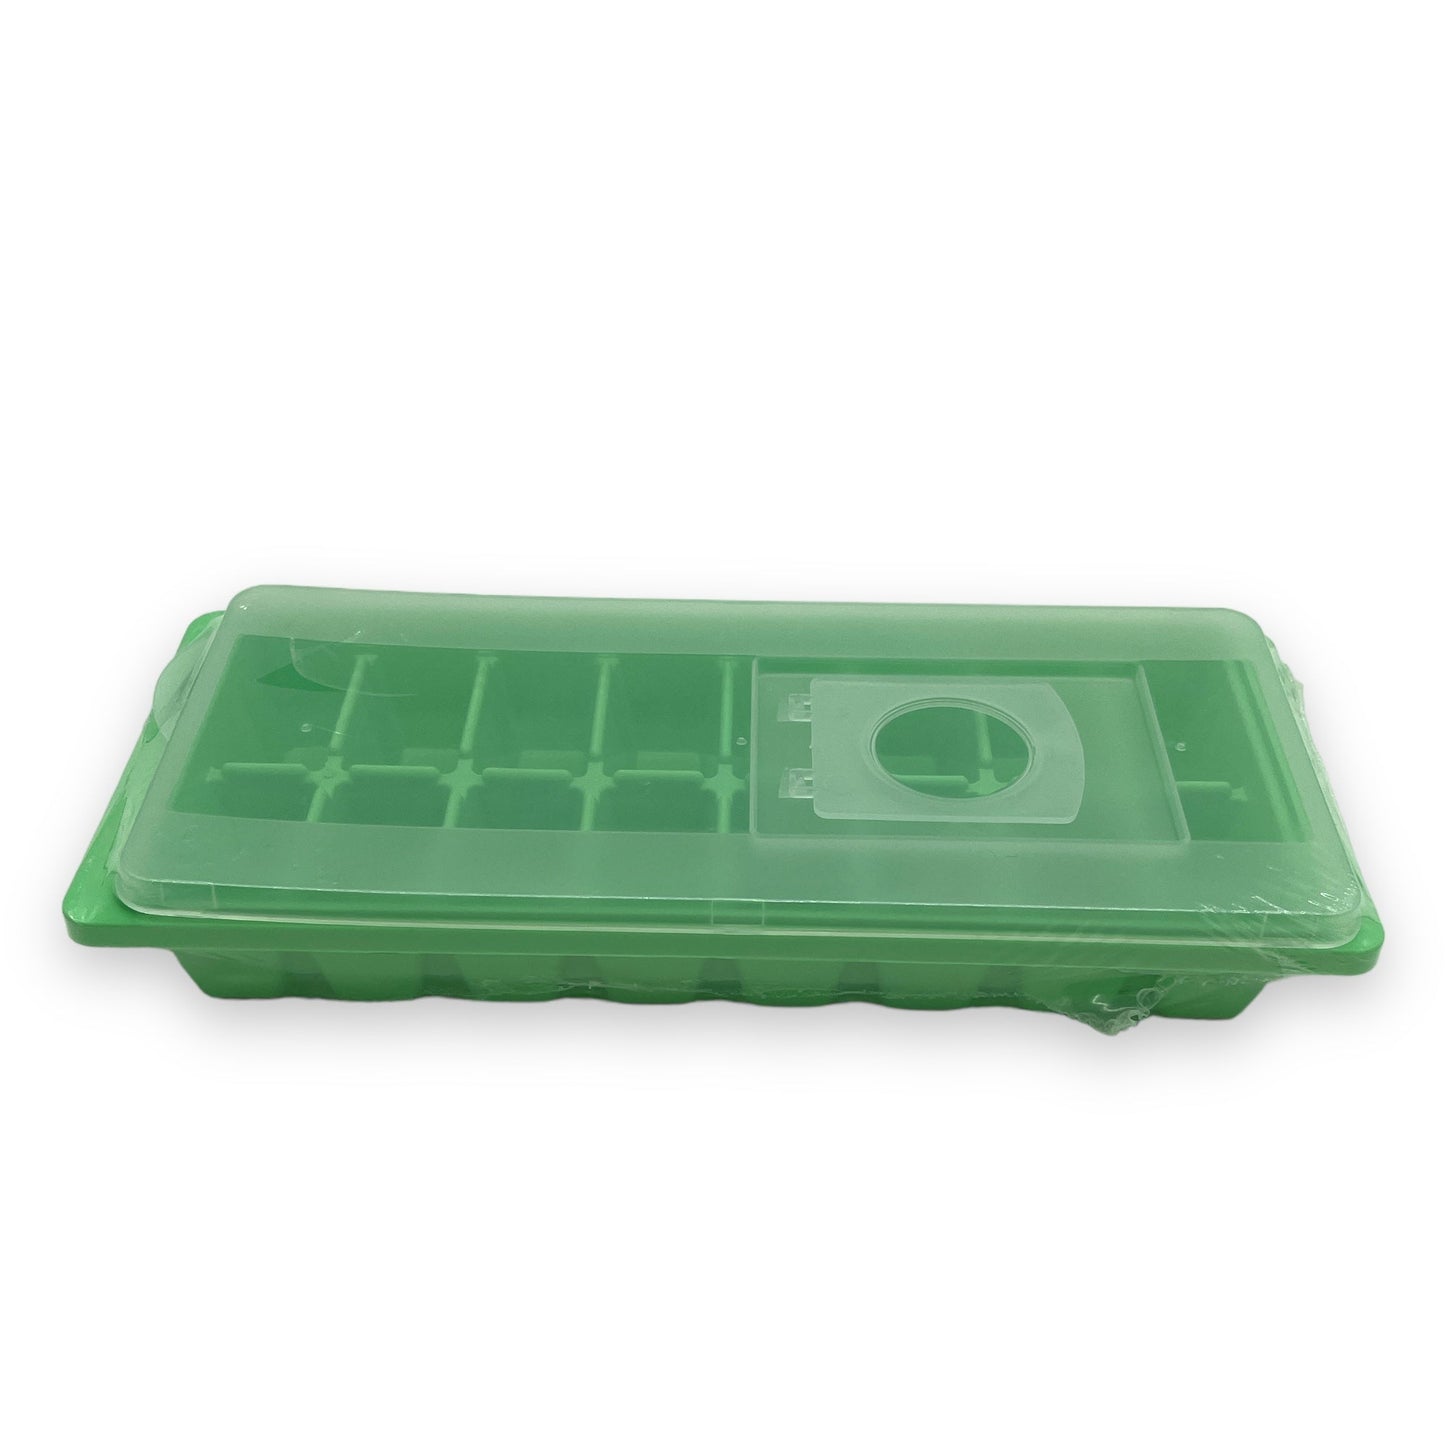 Timmy Toys - KRO002 - Ice Blocks Maker - 16x11cm - 4 Colours - 1 Piece